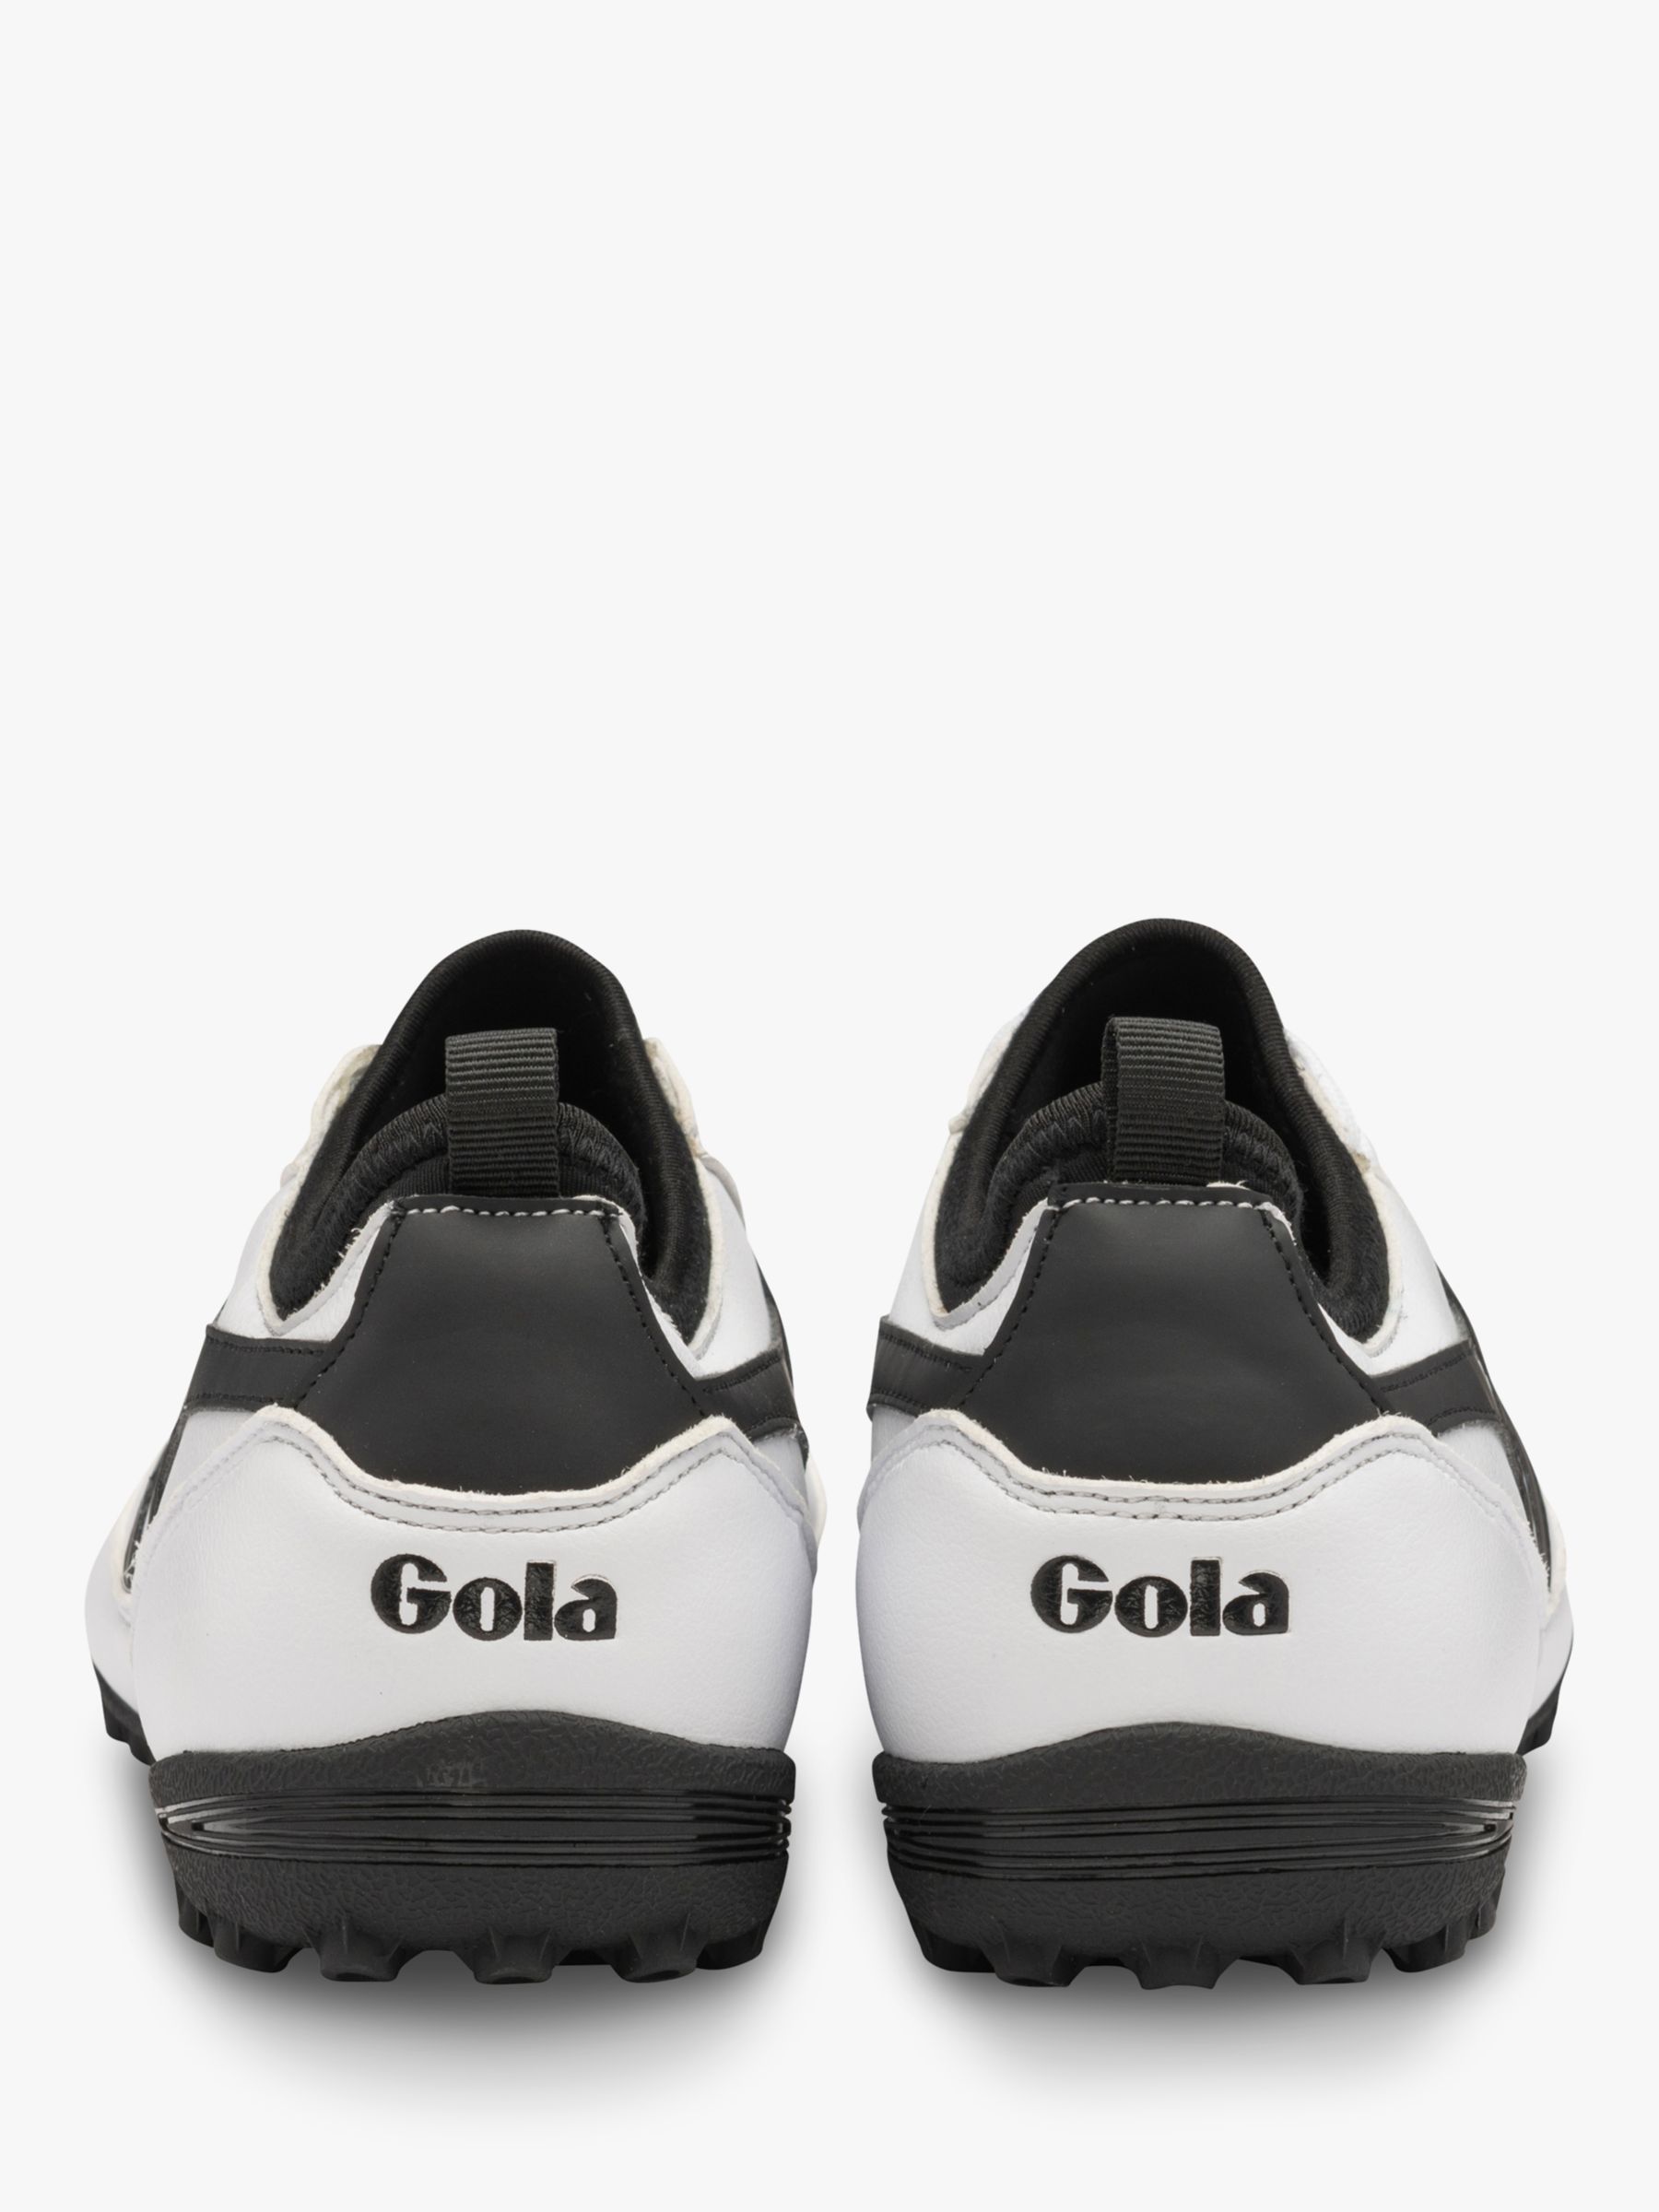 Gola Performance Kids' Ceptor Turf Football Trainers, White/Black, EU34